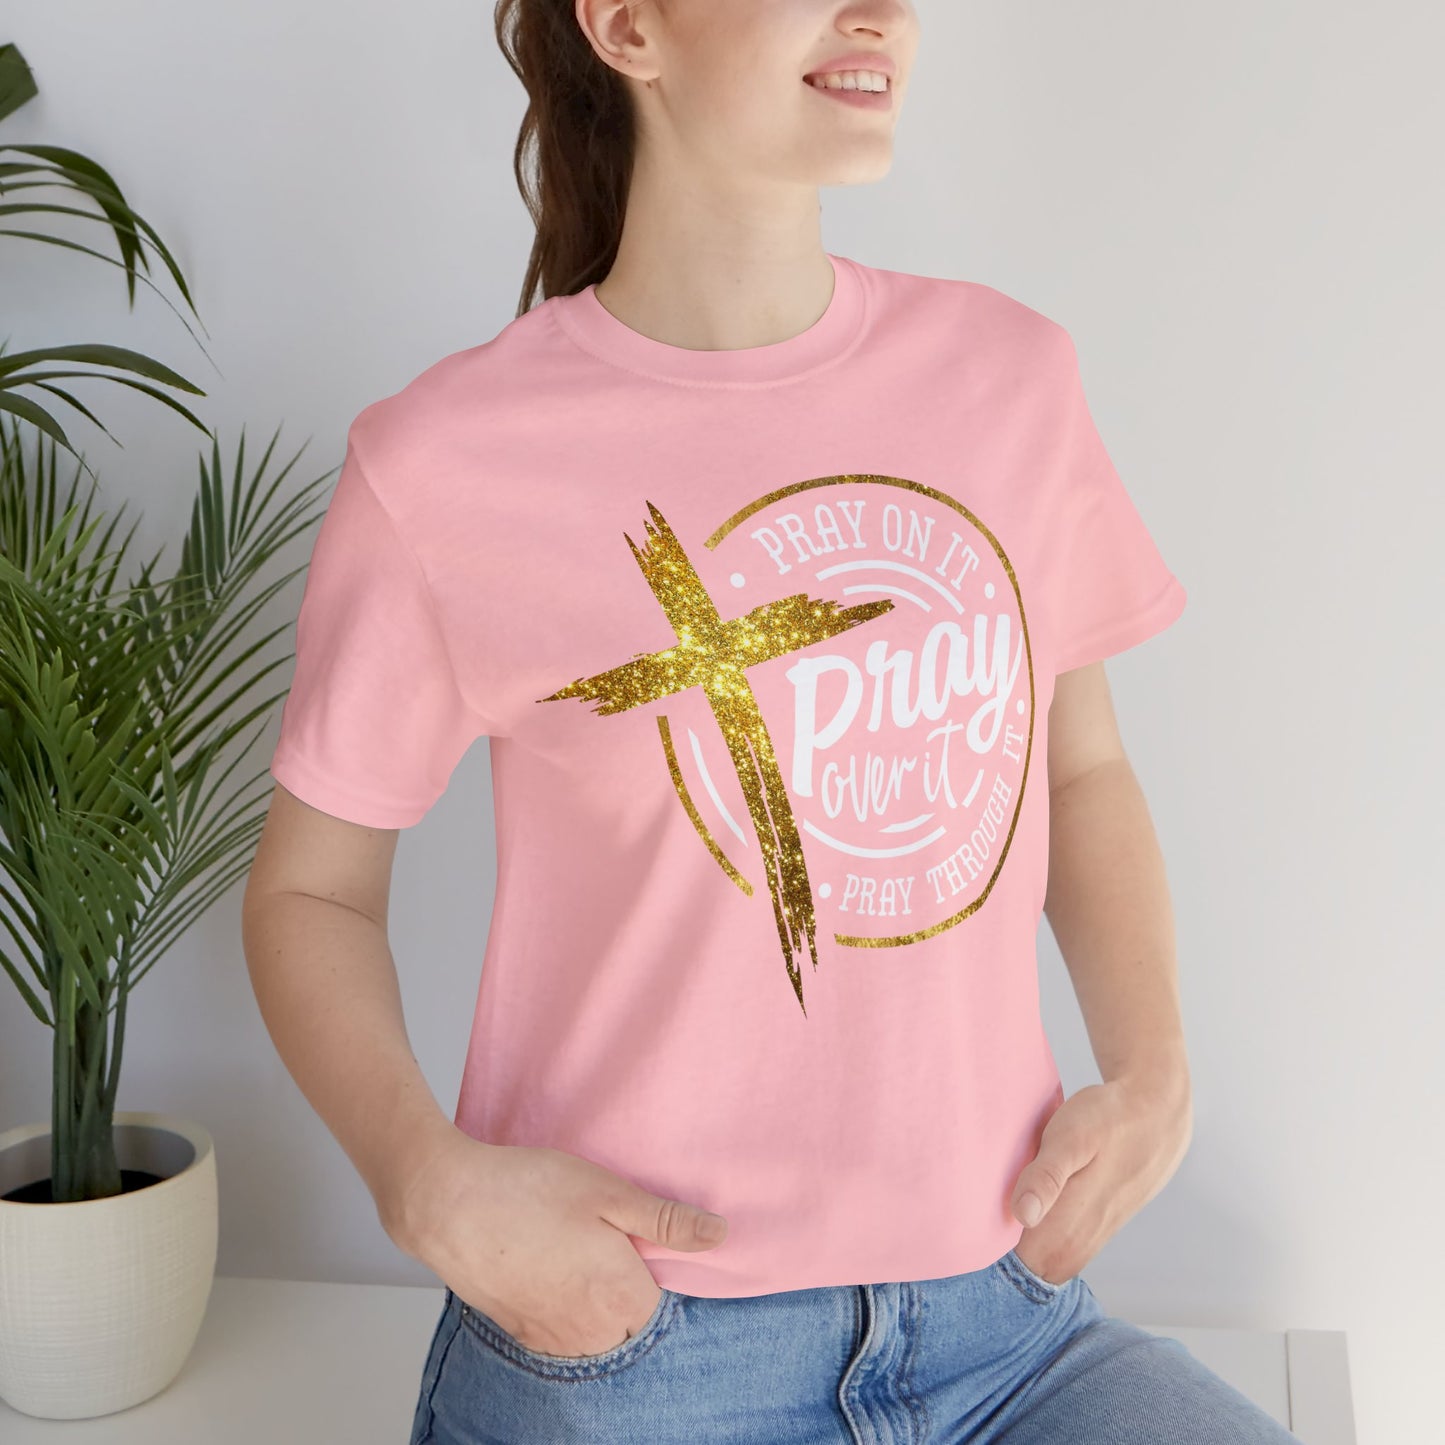 Pray on it Women's T-Shirt